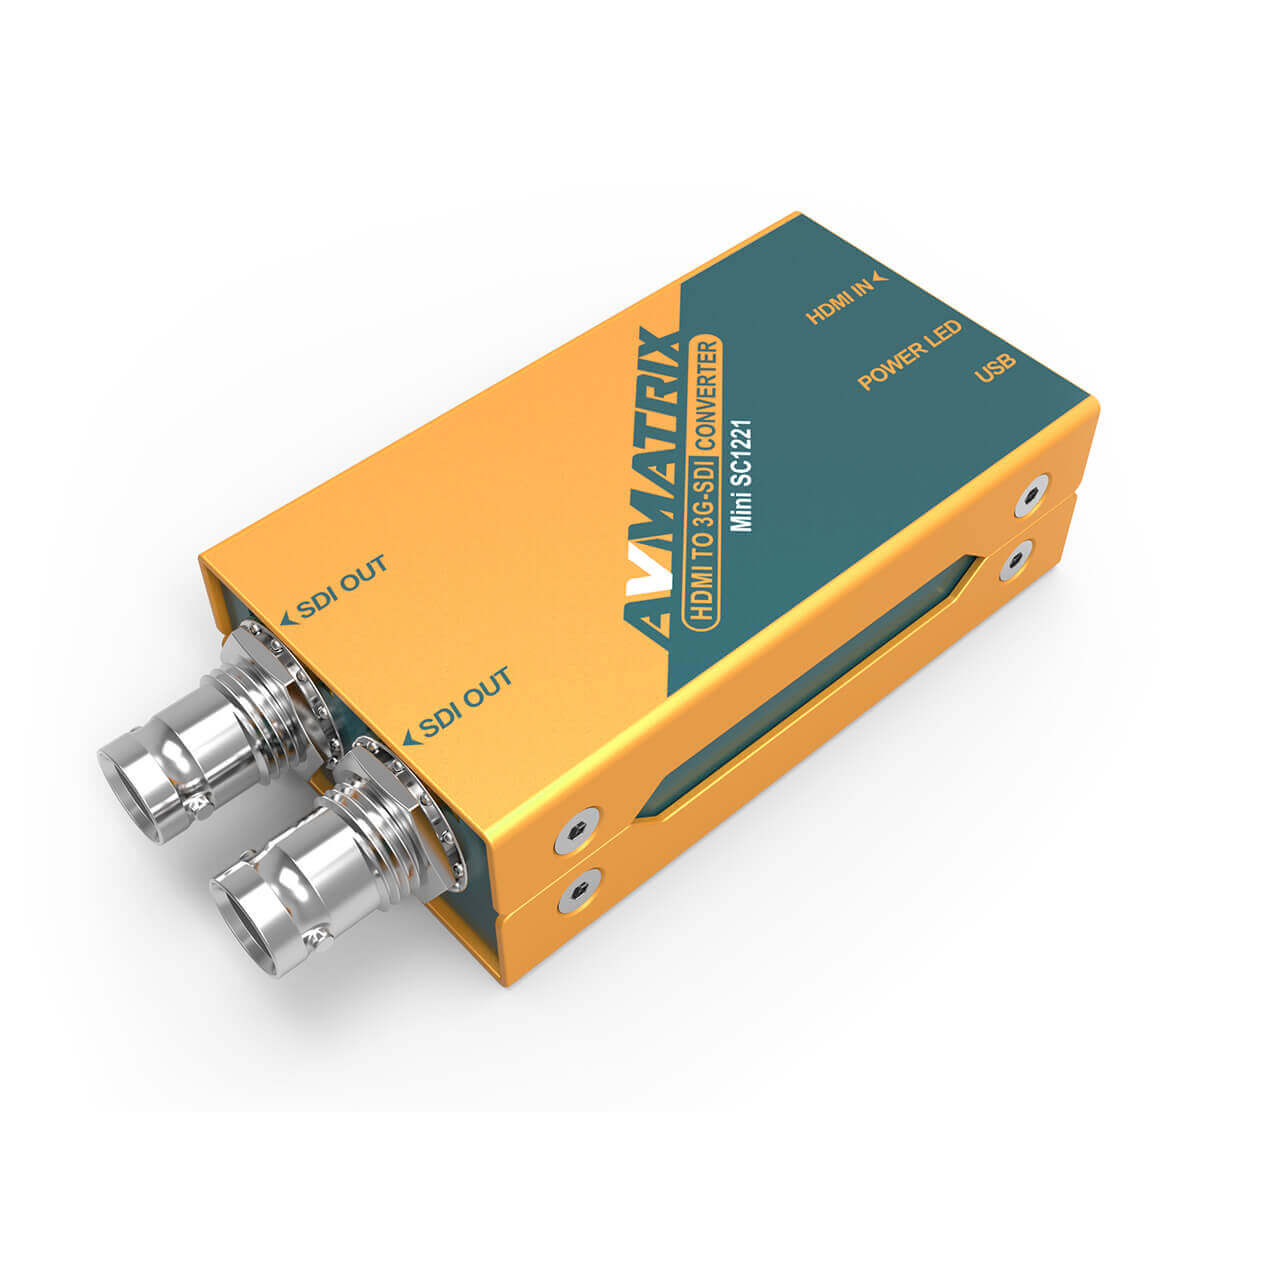 AVMATRIX Mini SC1221 Pocket-size Broadcast Converter HDMI to 3G-SDI 